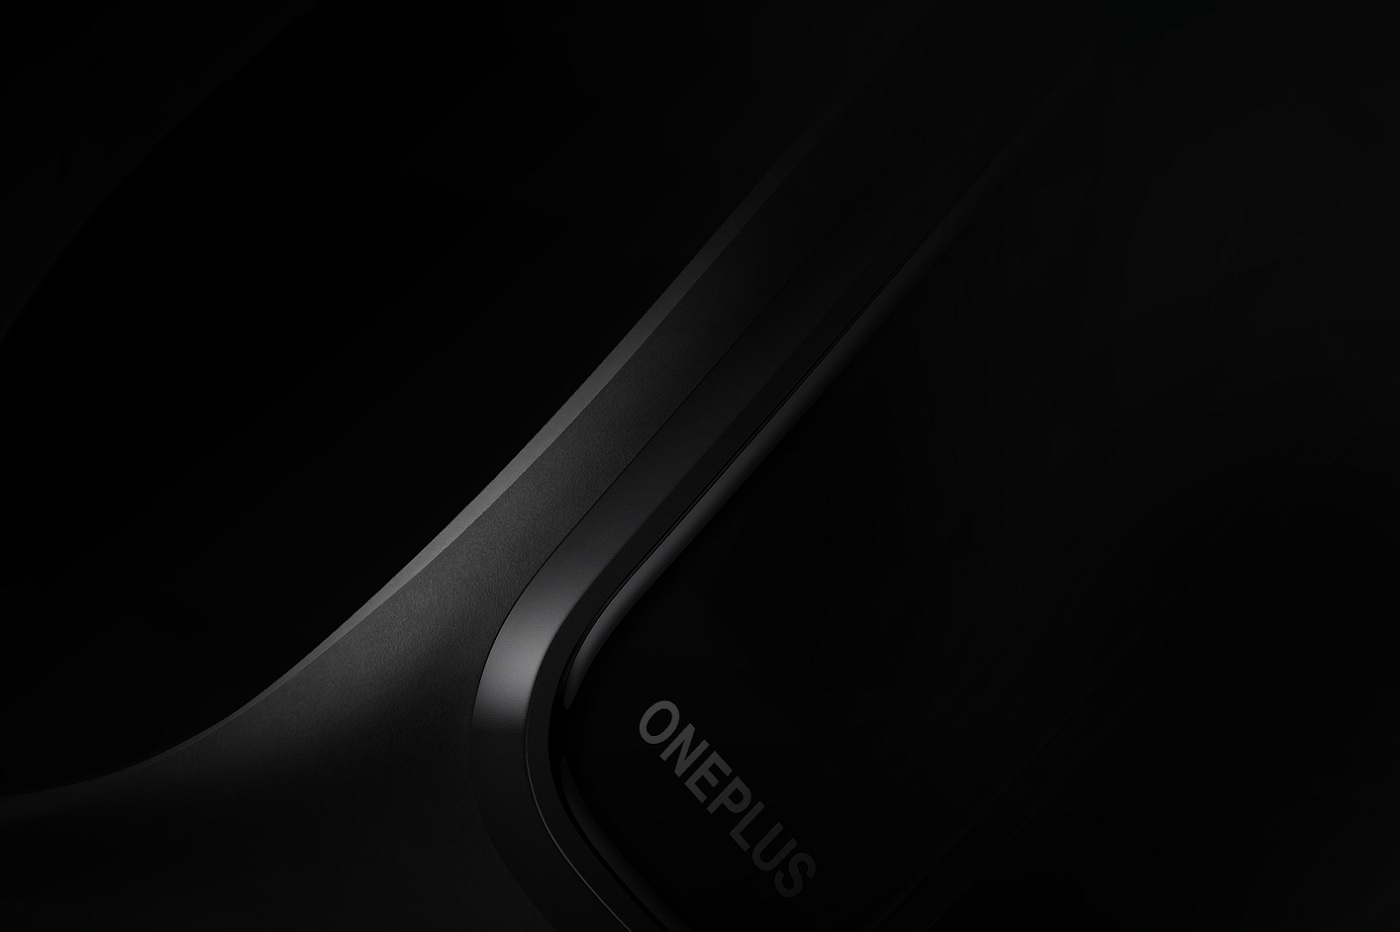 OnePlus تعلن عن أول سوار لياقة يحمل اسمها OnePlus Band